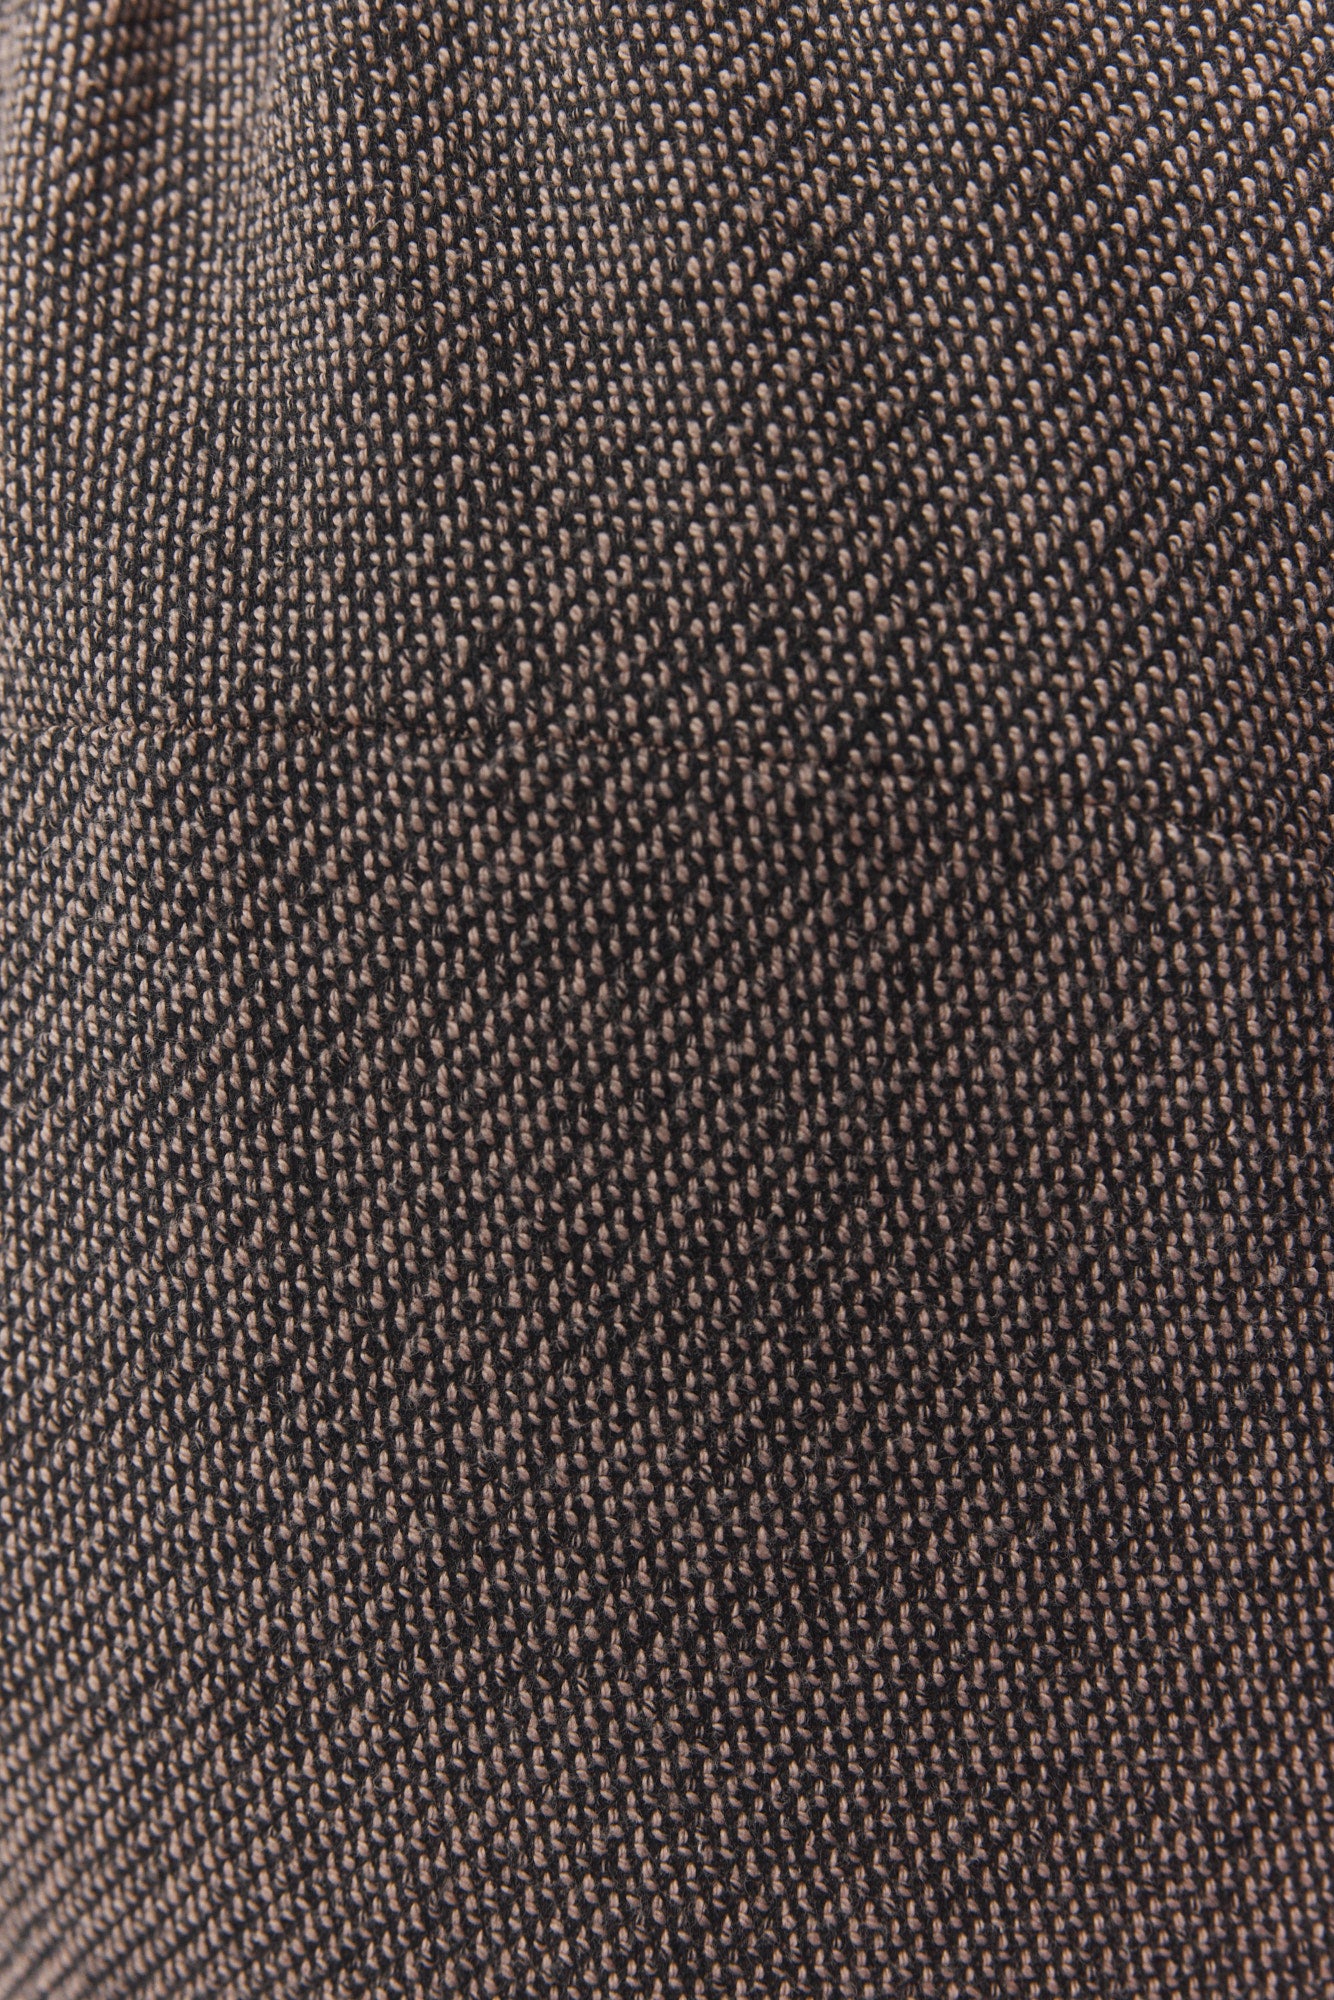 Pantalon noir et beige texturé | Koko